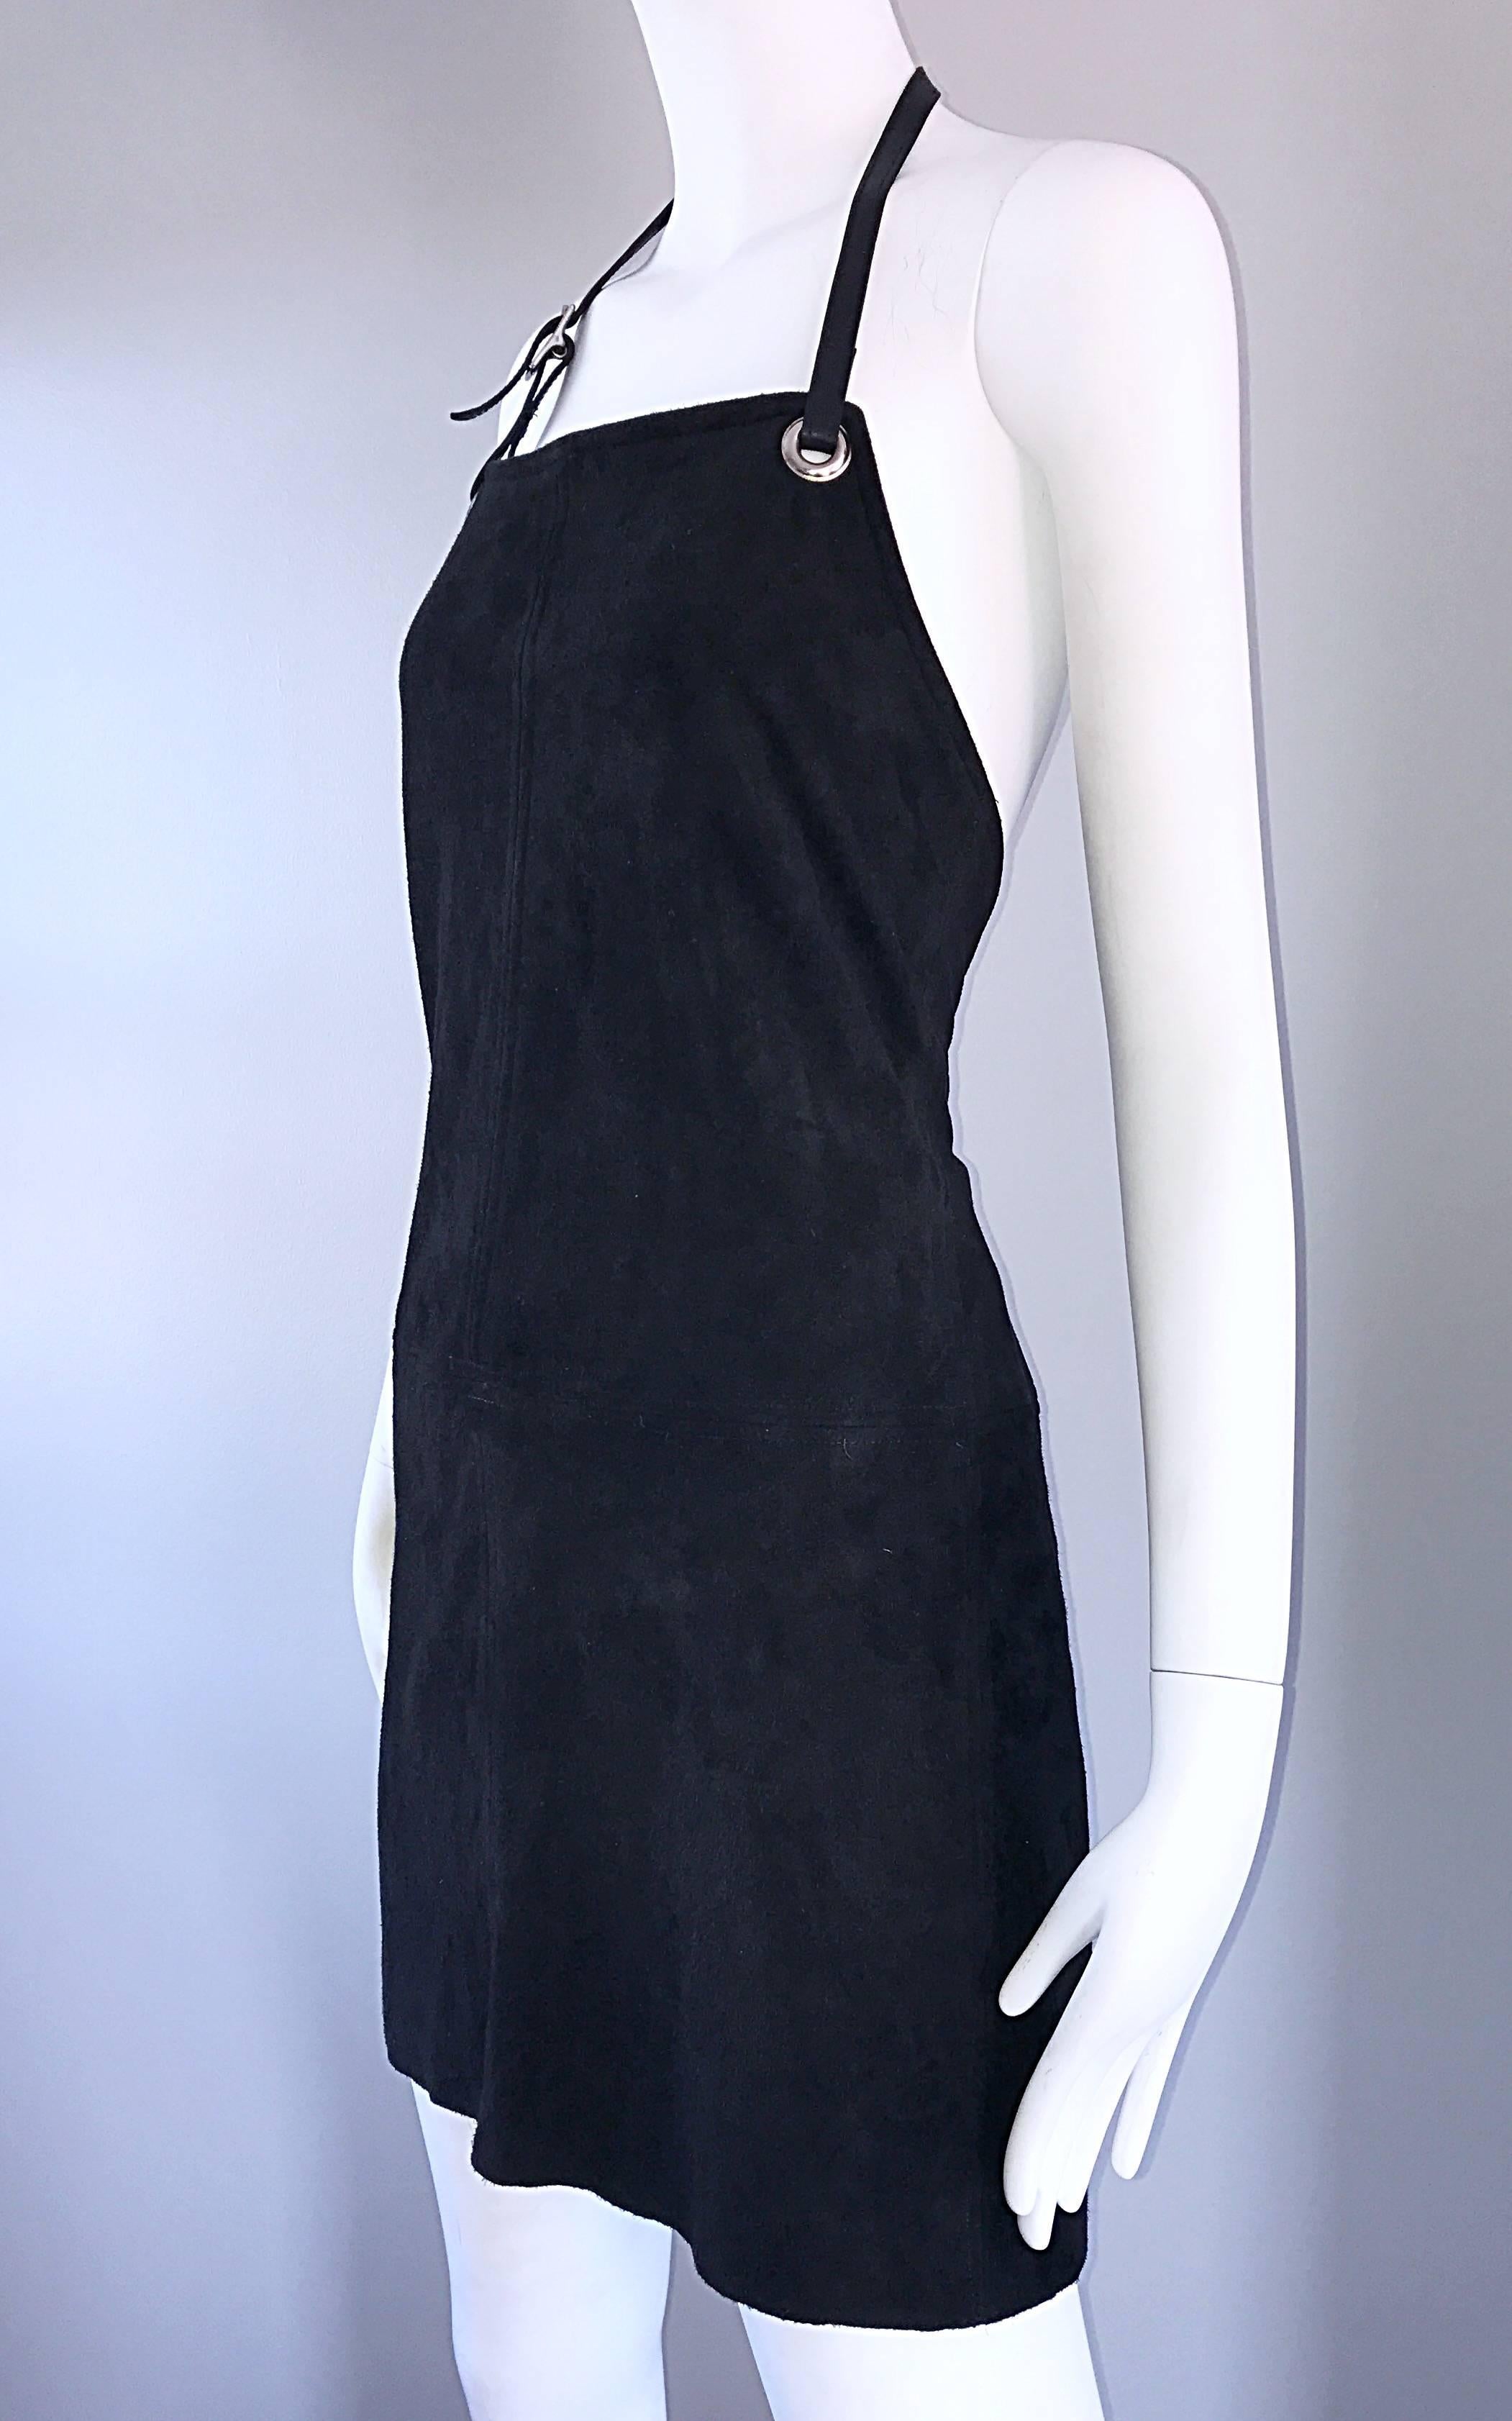 Helmut Lang Early 1990s Rare Black Leather Suede Apron Halter Dress Vintage 90s For Sale 2